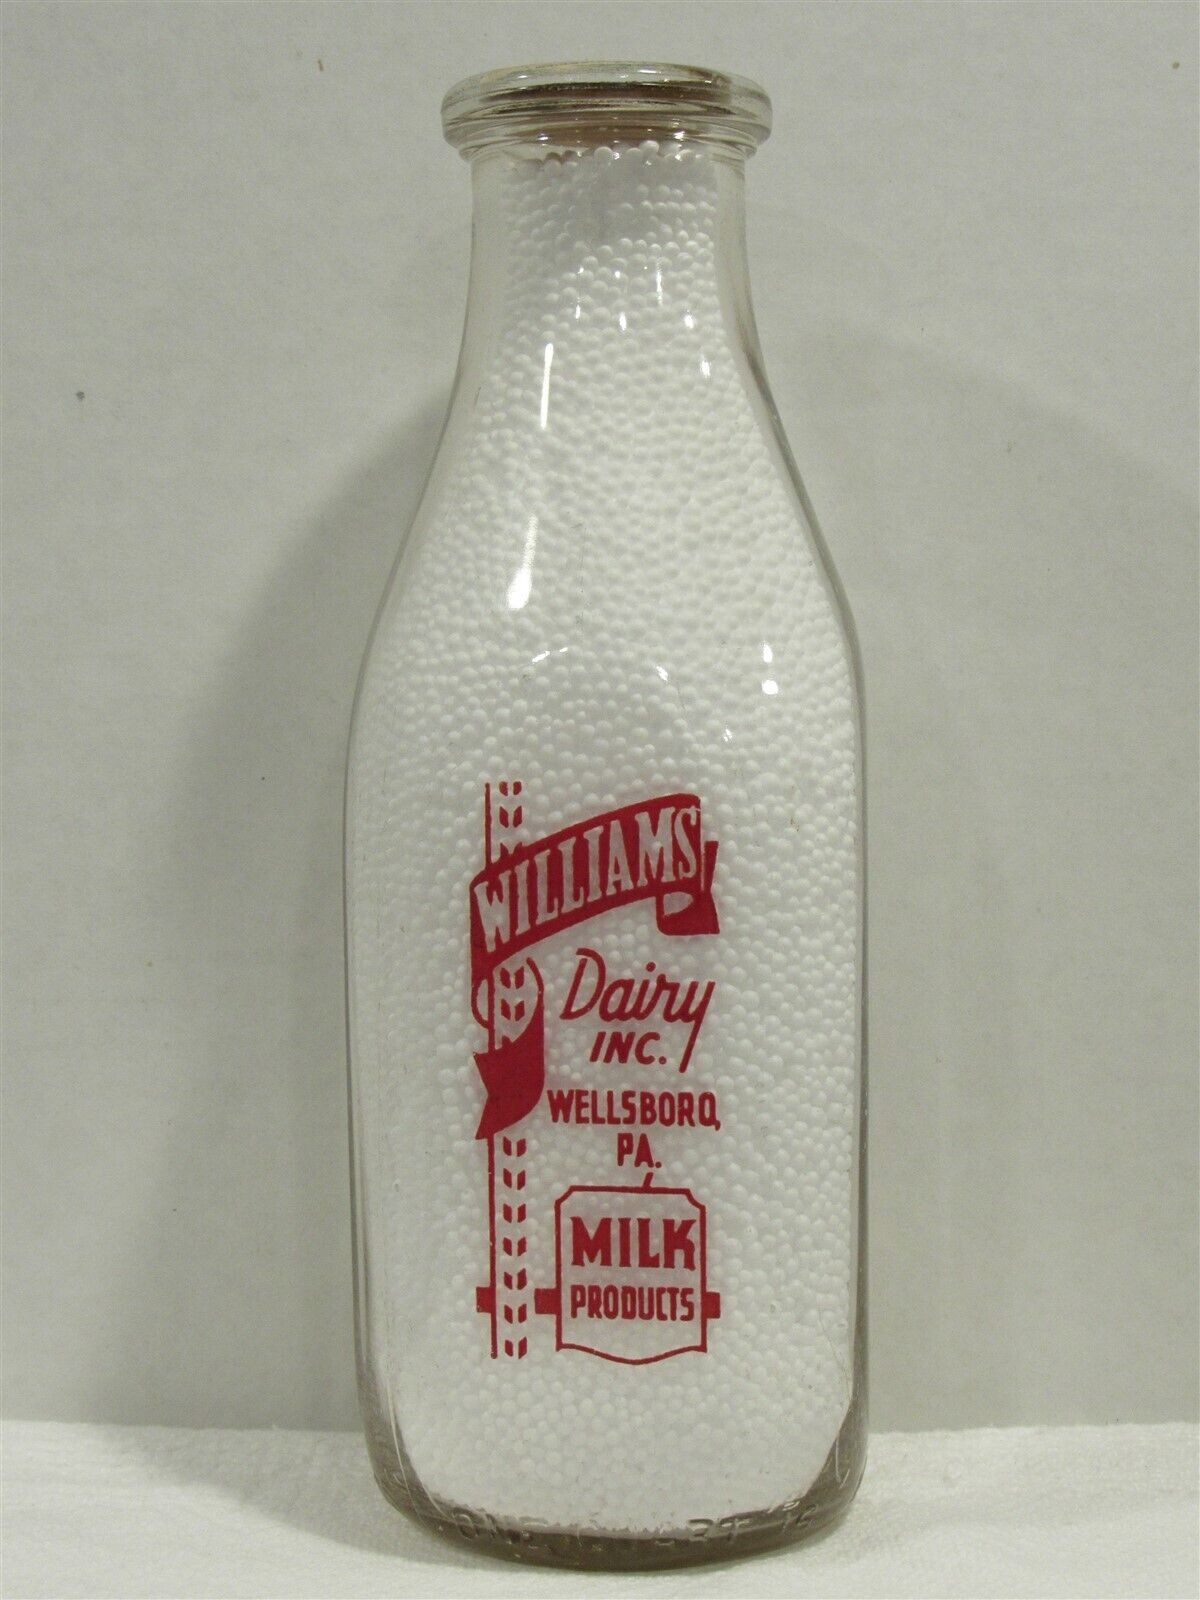 TSPQ Milk Bottle Williams Dairy Inc Milk Products Wellsboro PA TIOGA COUNTY 1950